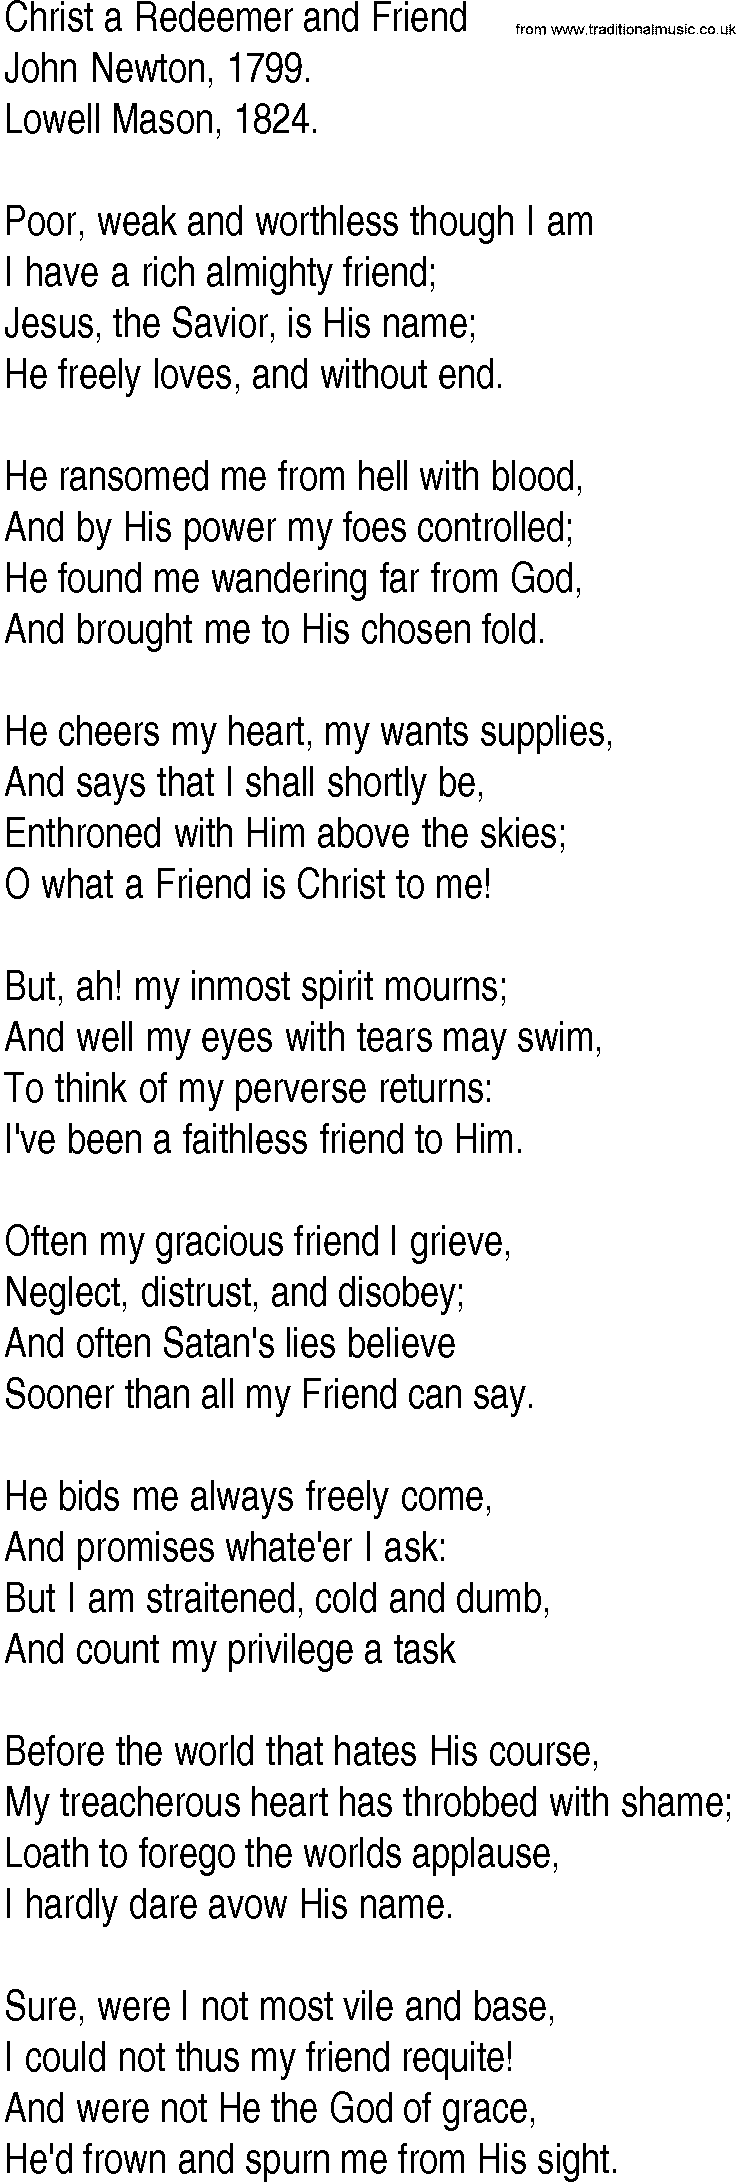 Hymn and Gospel Song: Christ a Redeemer and Friend by John Newton lyrics